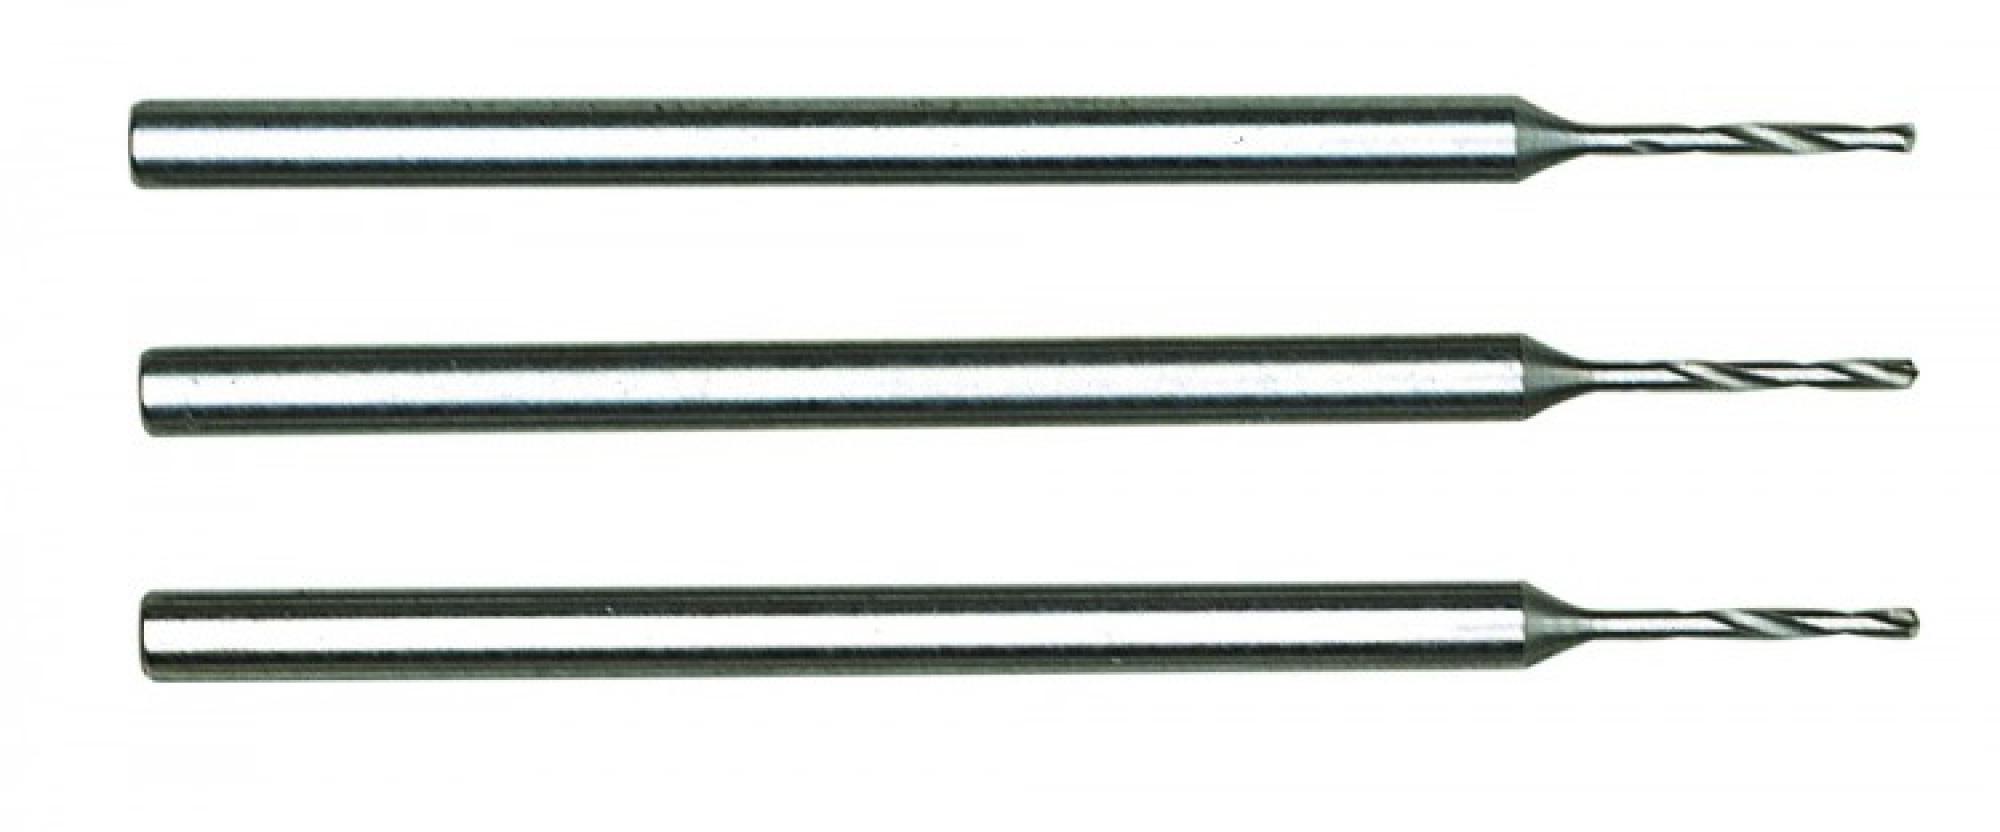 Micro drills (HSS), 0.8 mm, 3 pieces